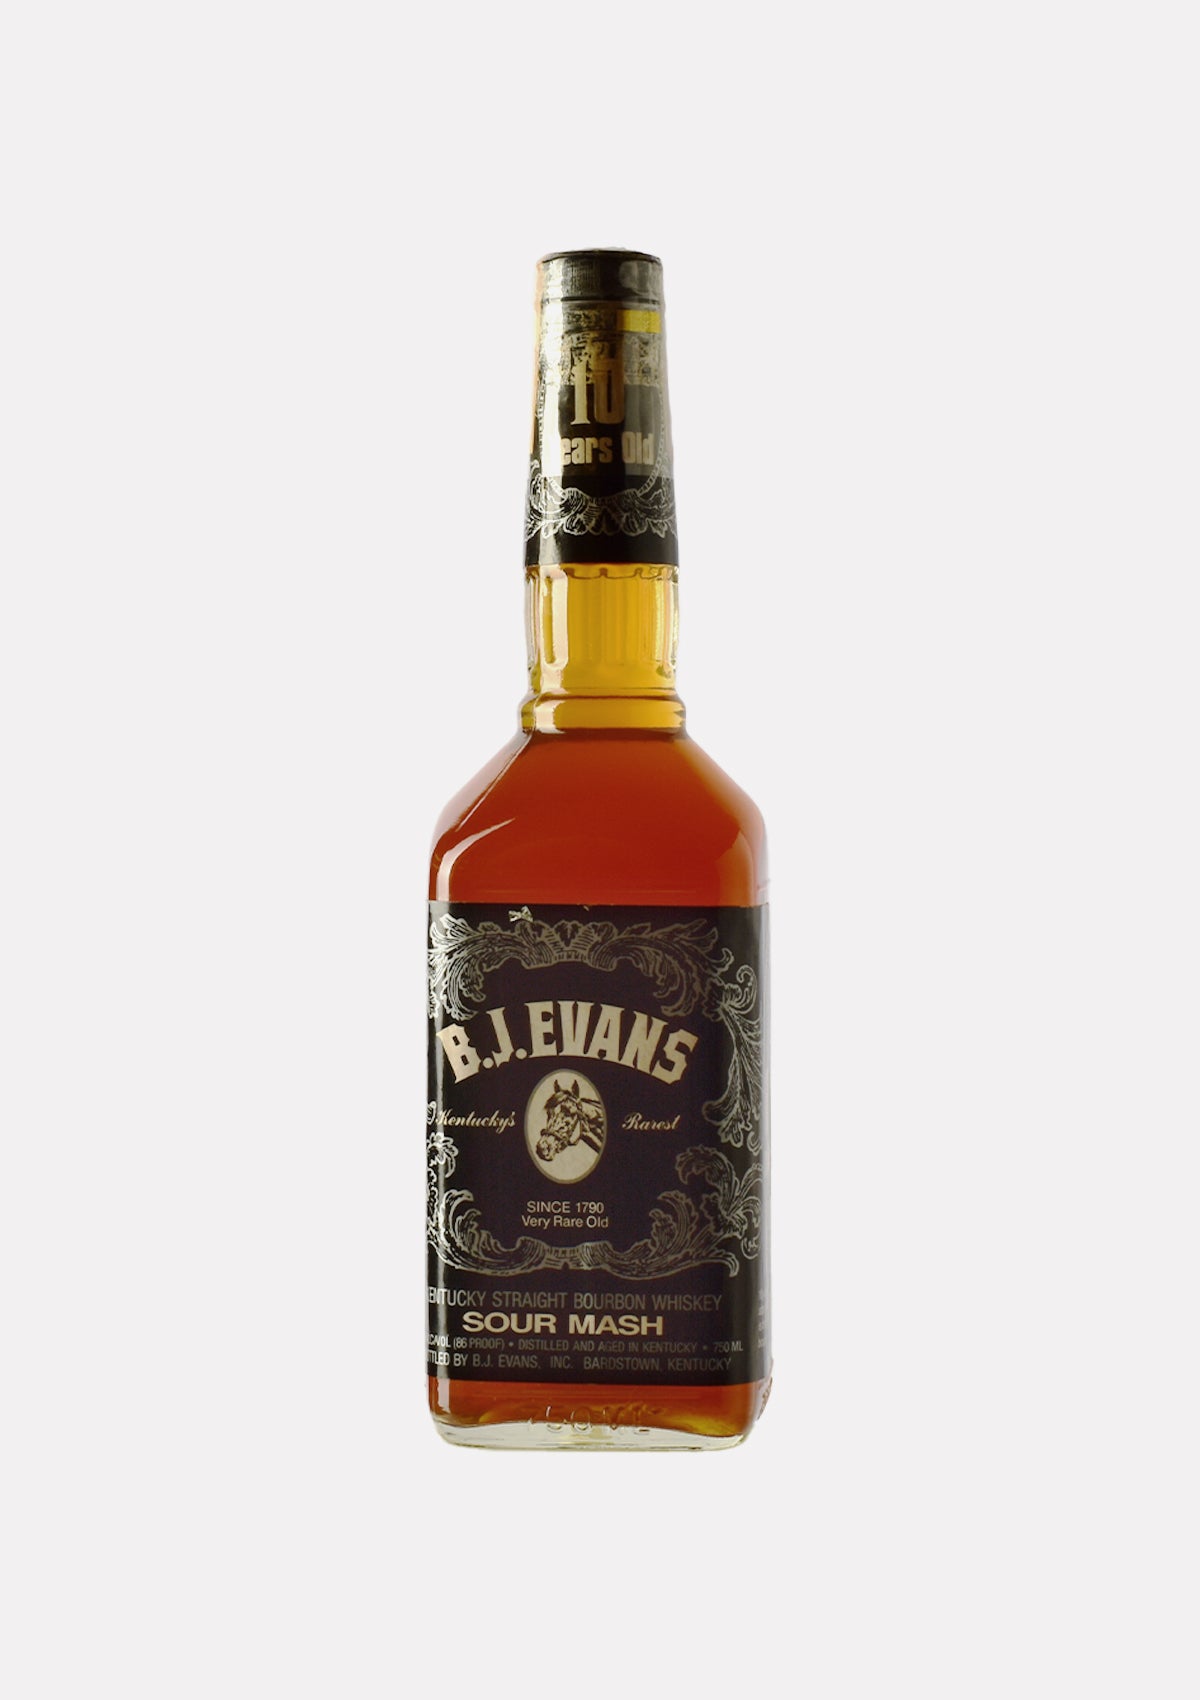 B.J. Evans Kentucky Straight Bourbon Whiskey 10 Jahre